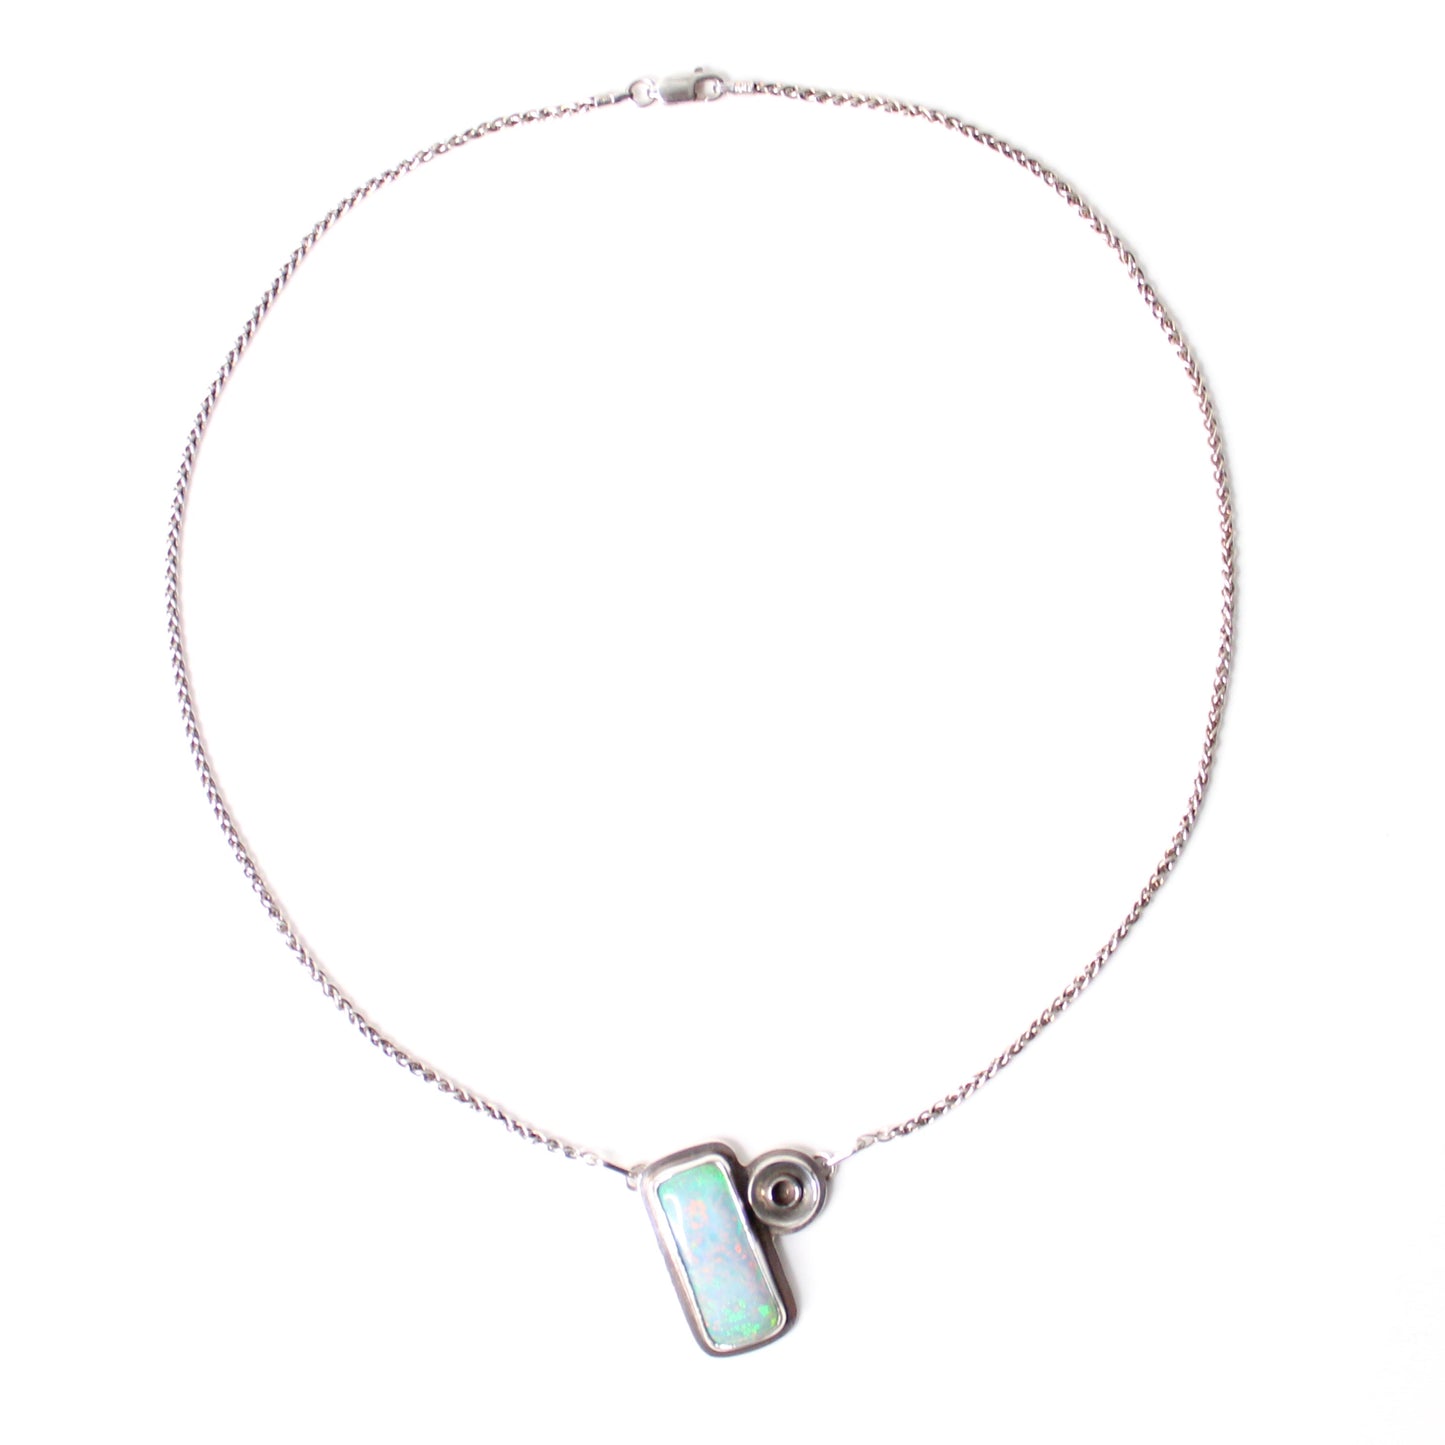 Atlantis Opal Pastel Gemstone set in an Architectural Design - Sterling Silver Necklace